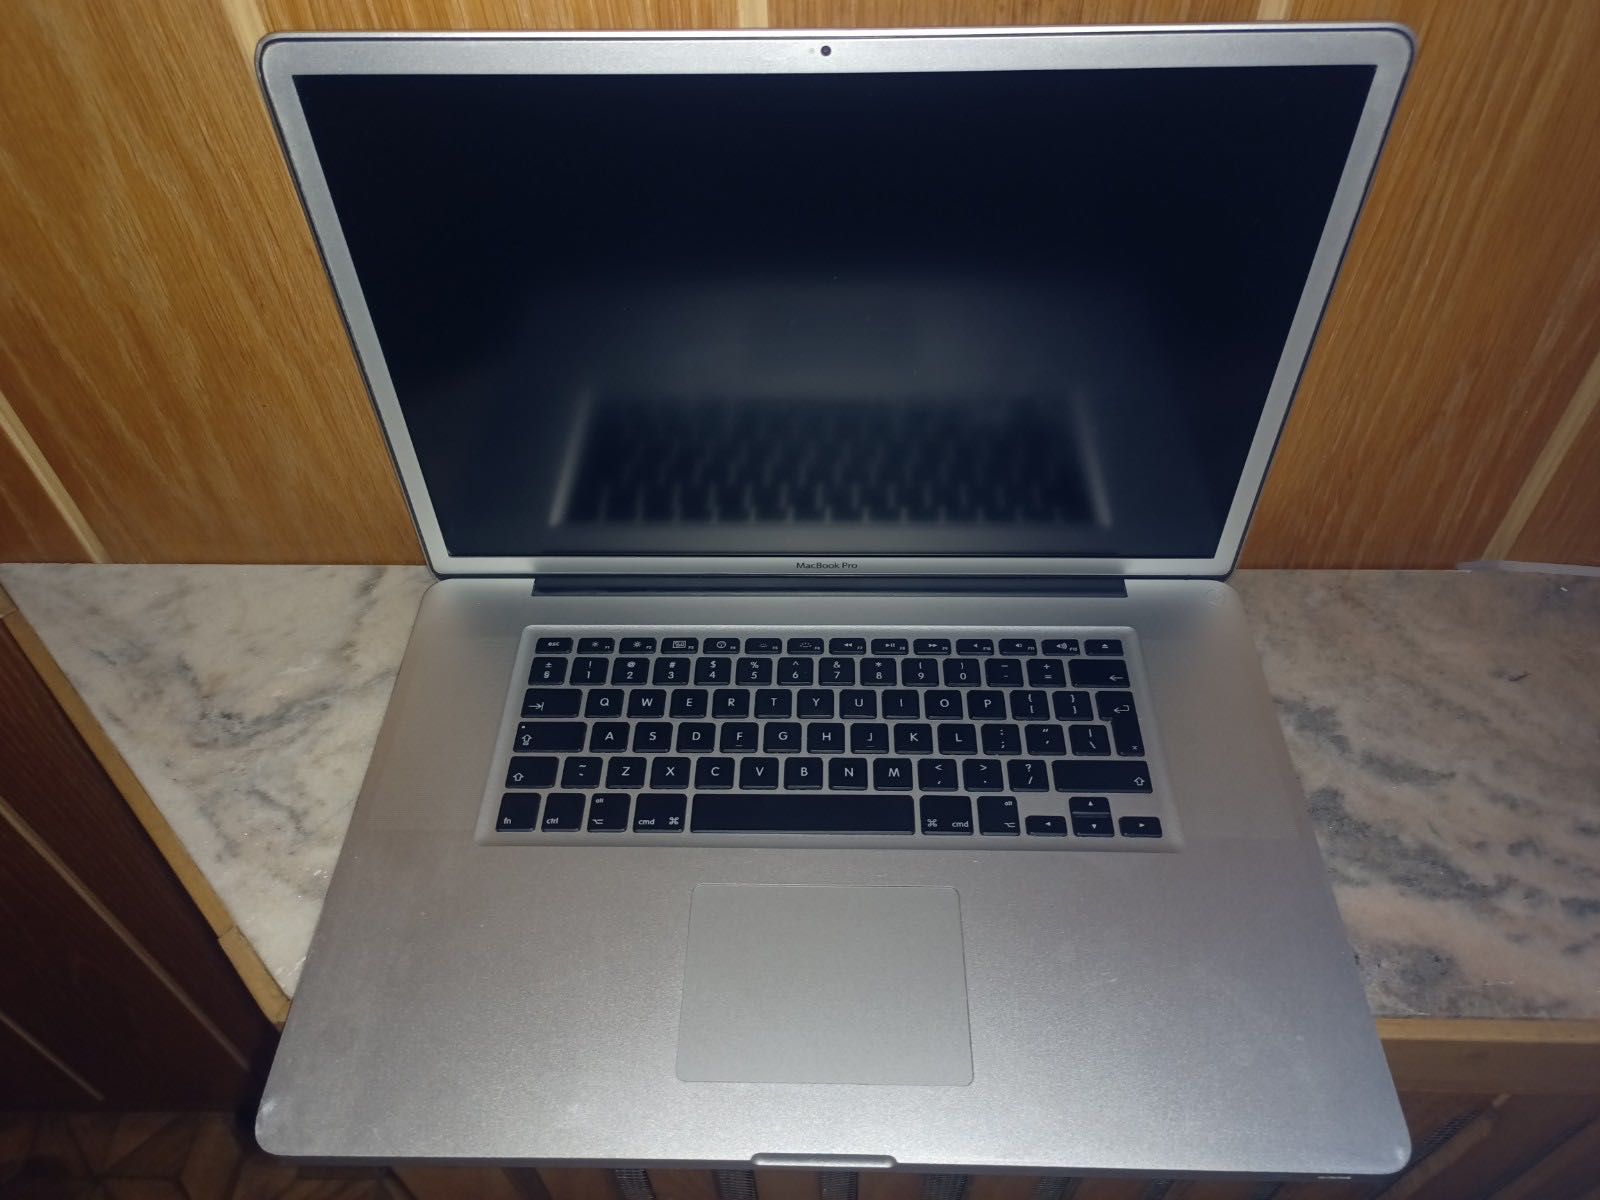  Apple MacBook Pro 17" A1297 i7 Mac OS HDD 750GB